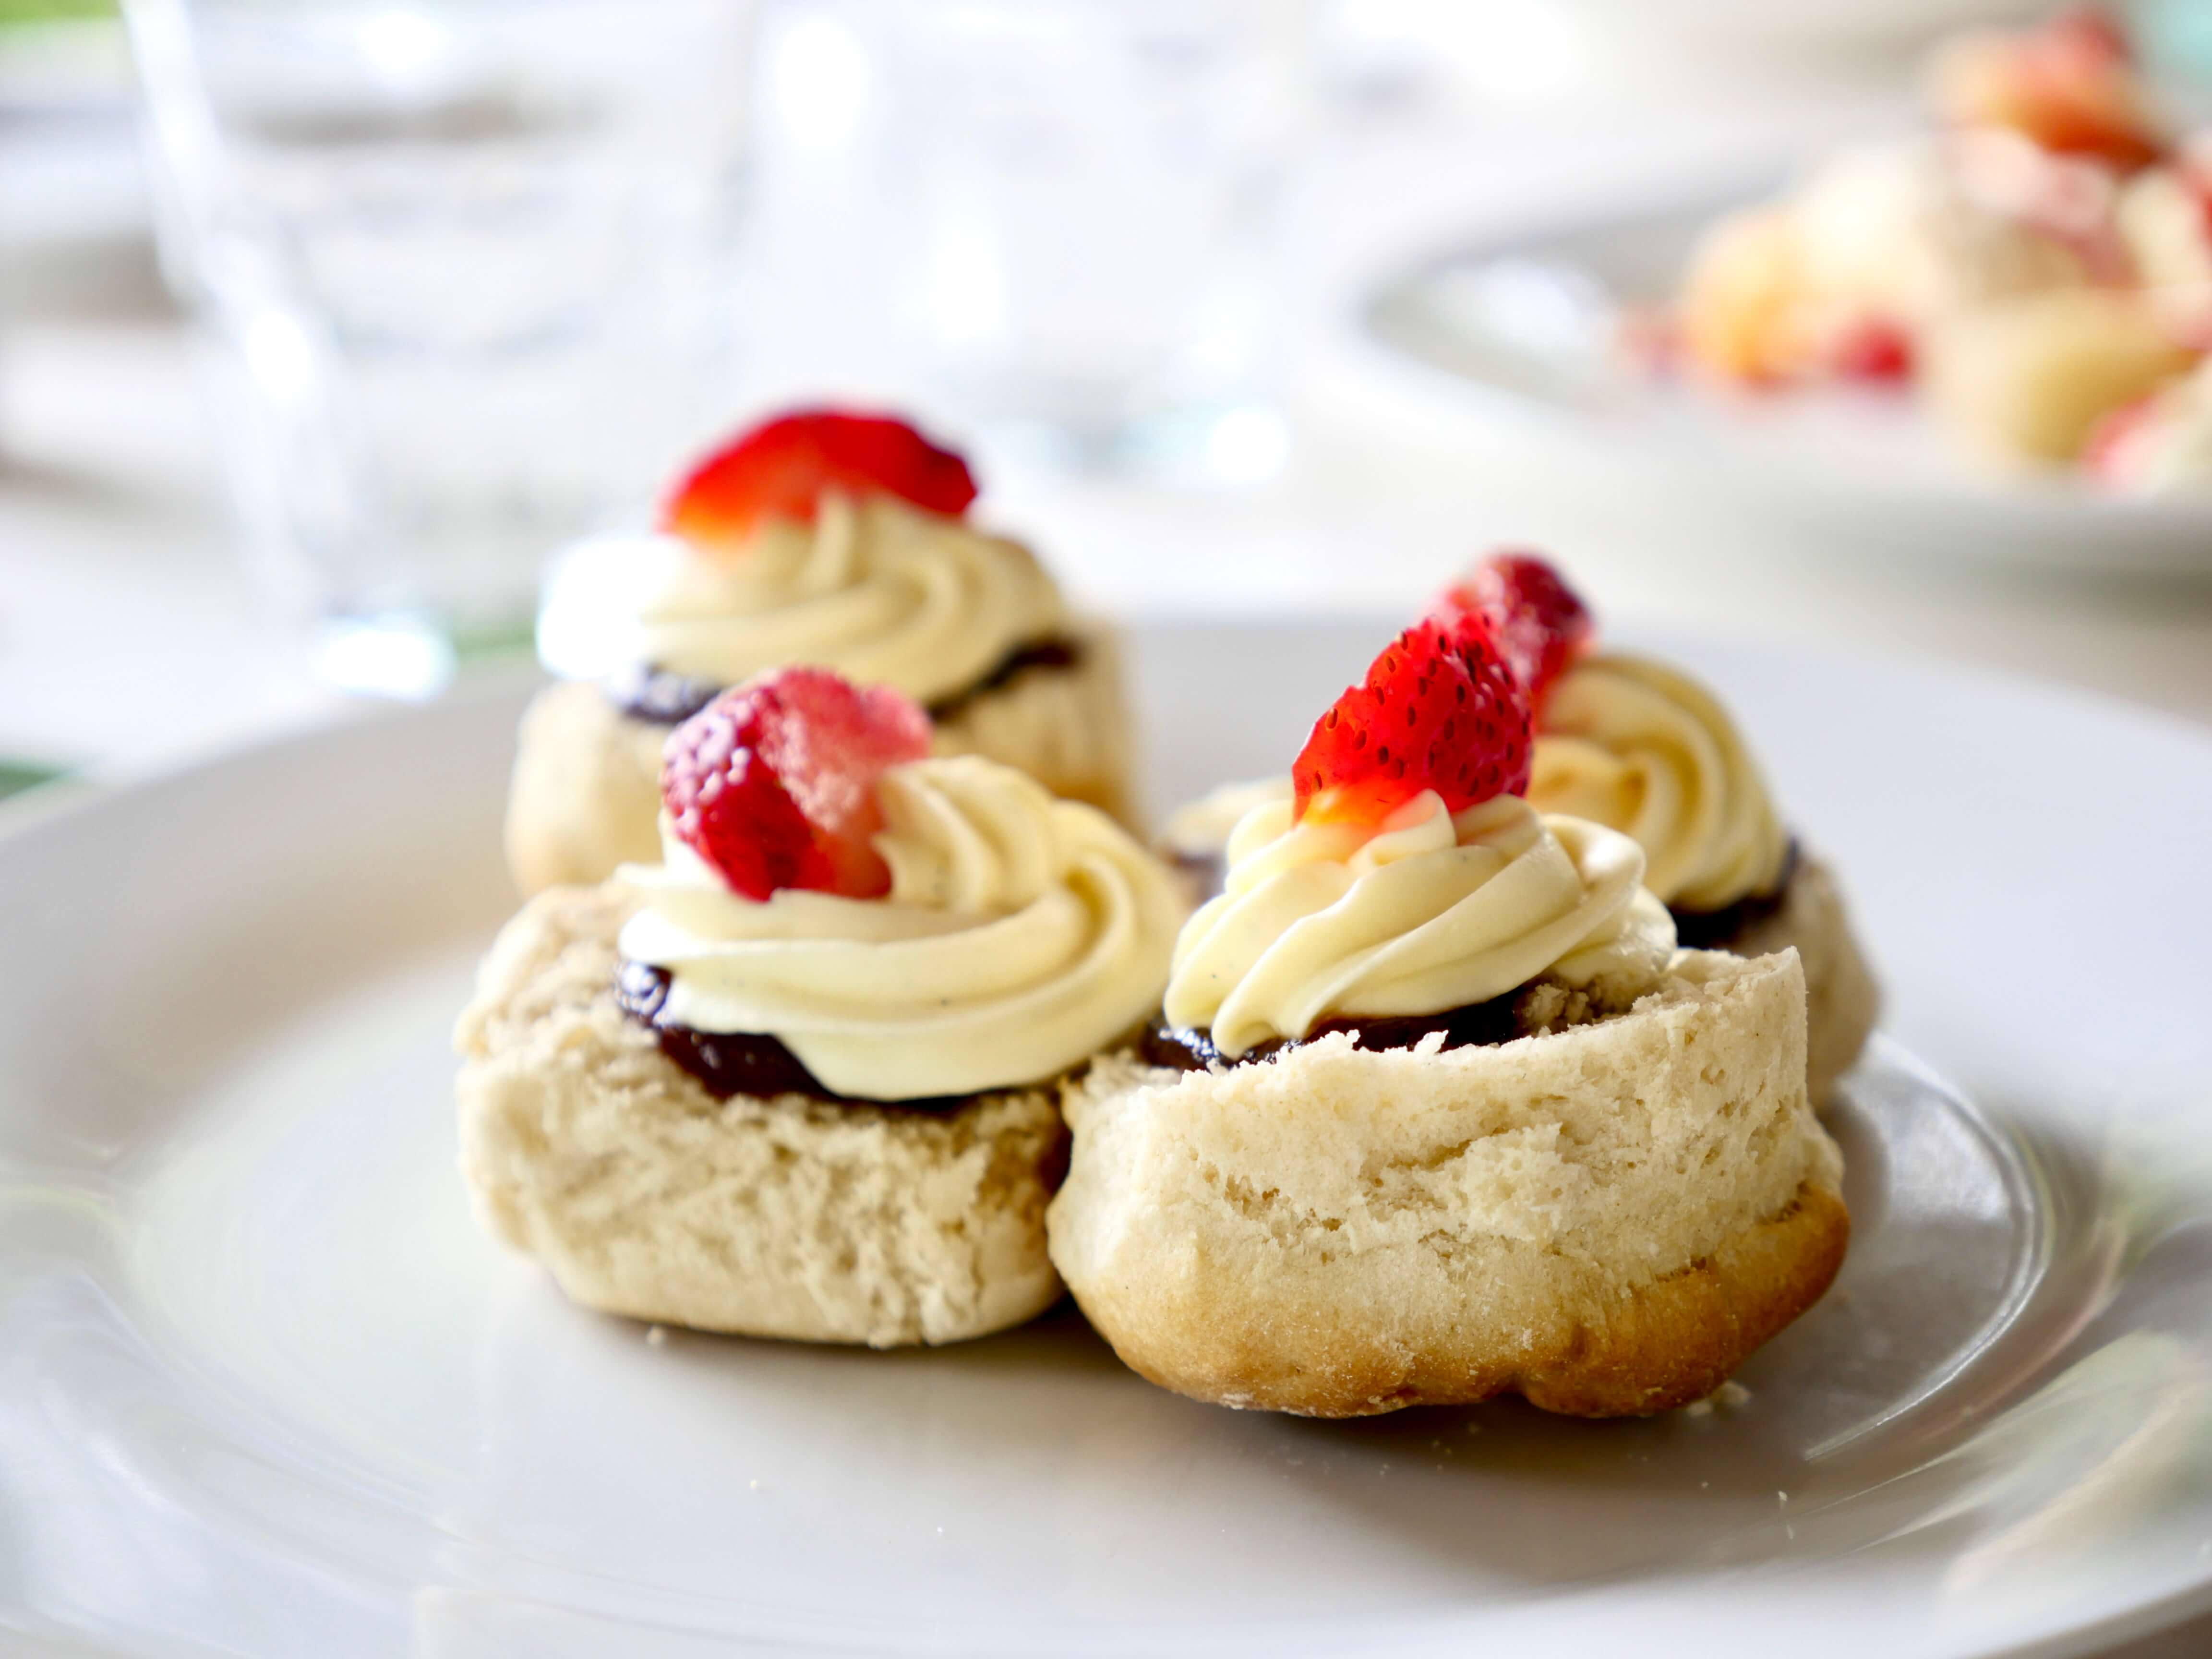 Flavoursome home made scones with cream and strawberry jam.